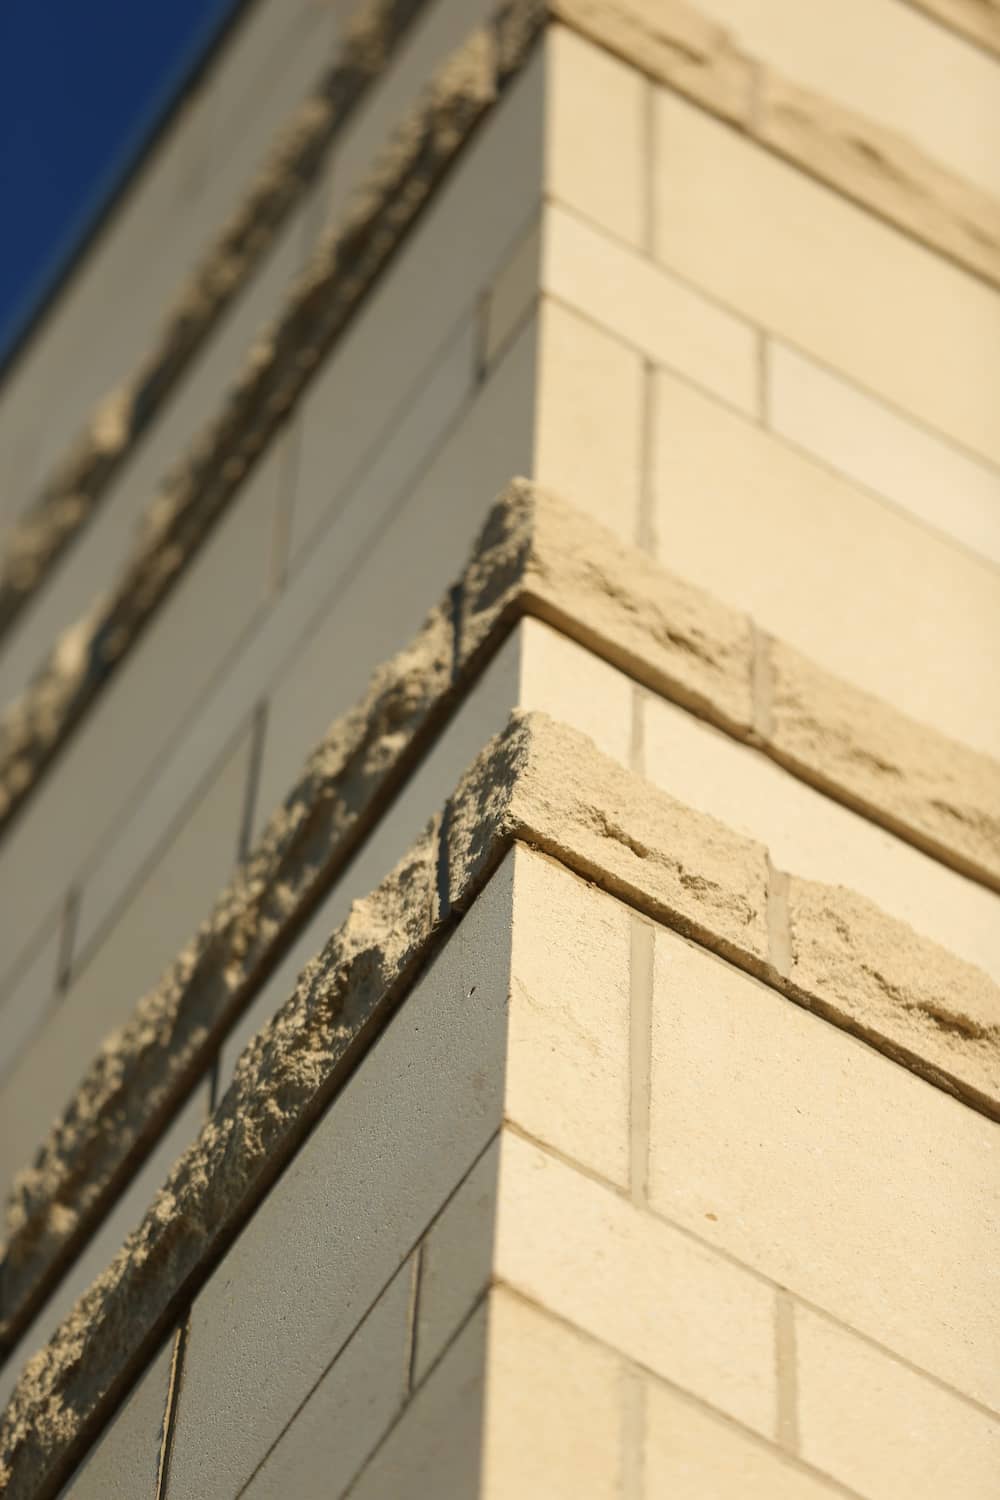 Close up of masonry work - Tan/beige stone